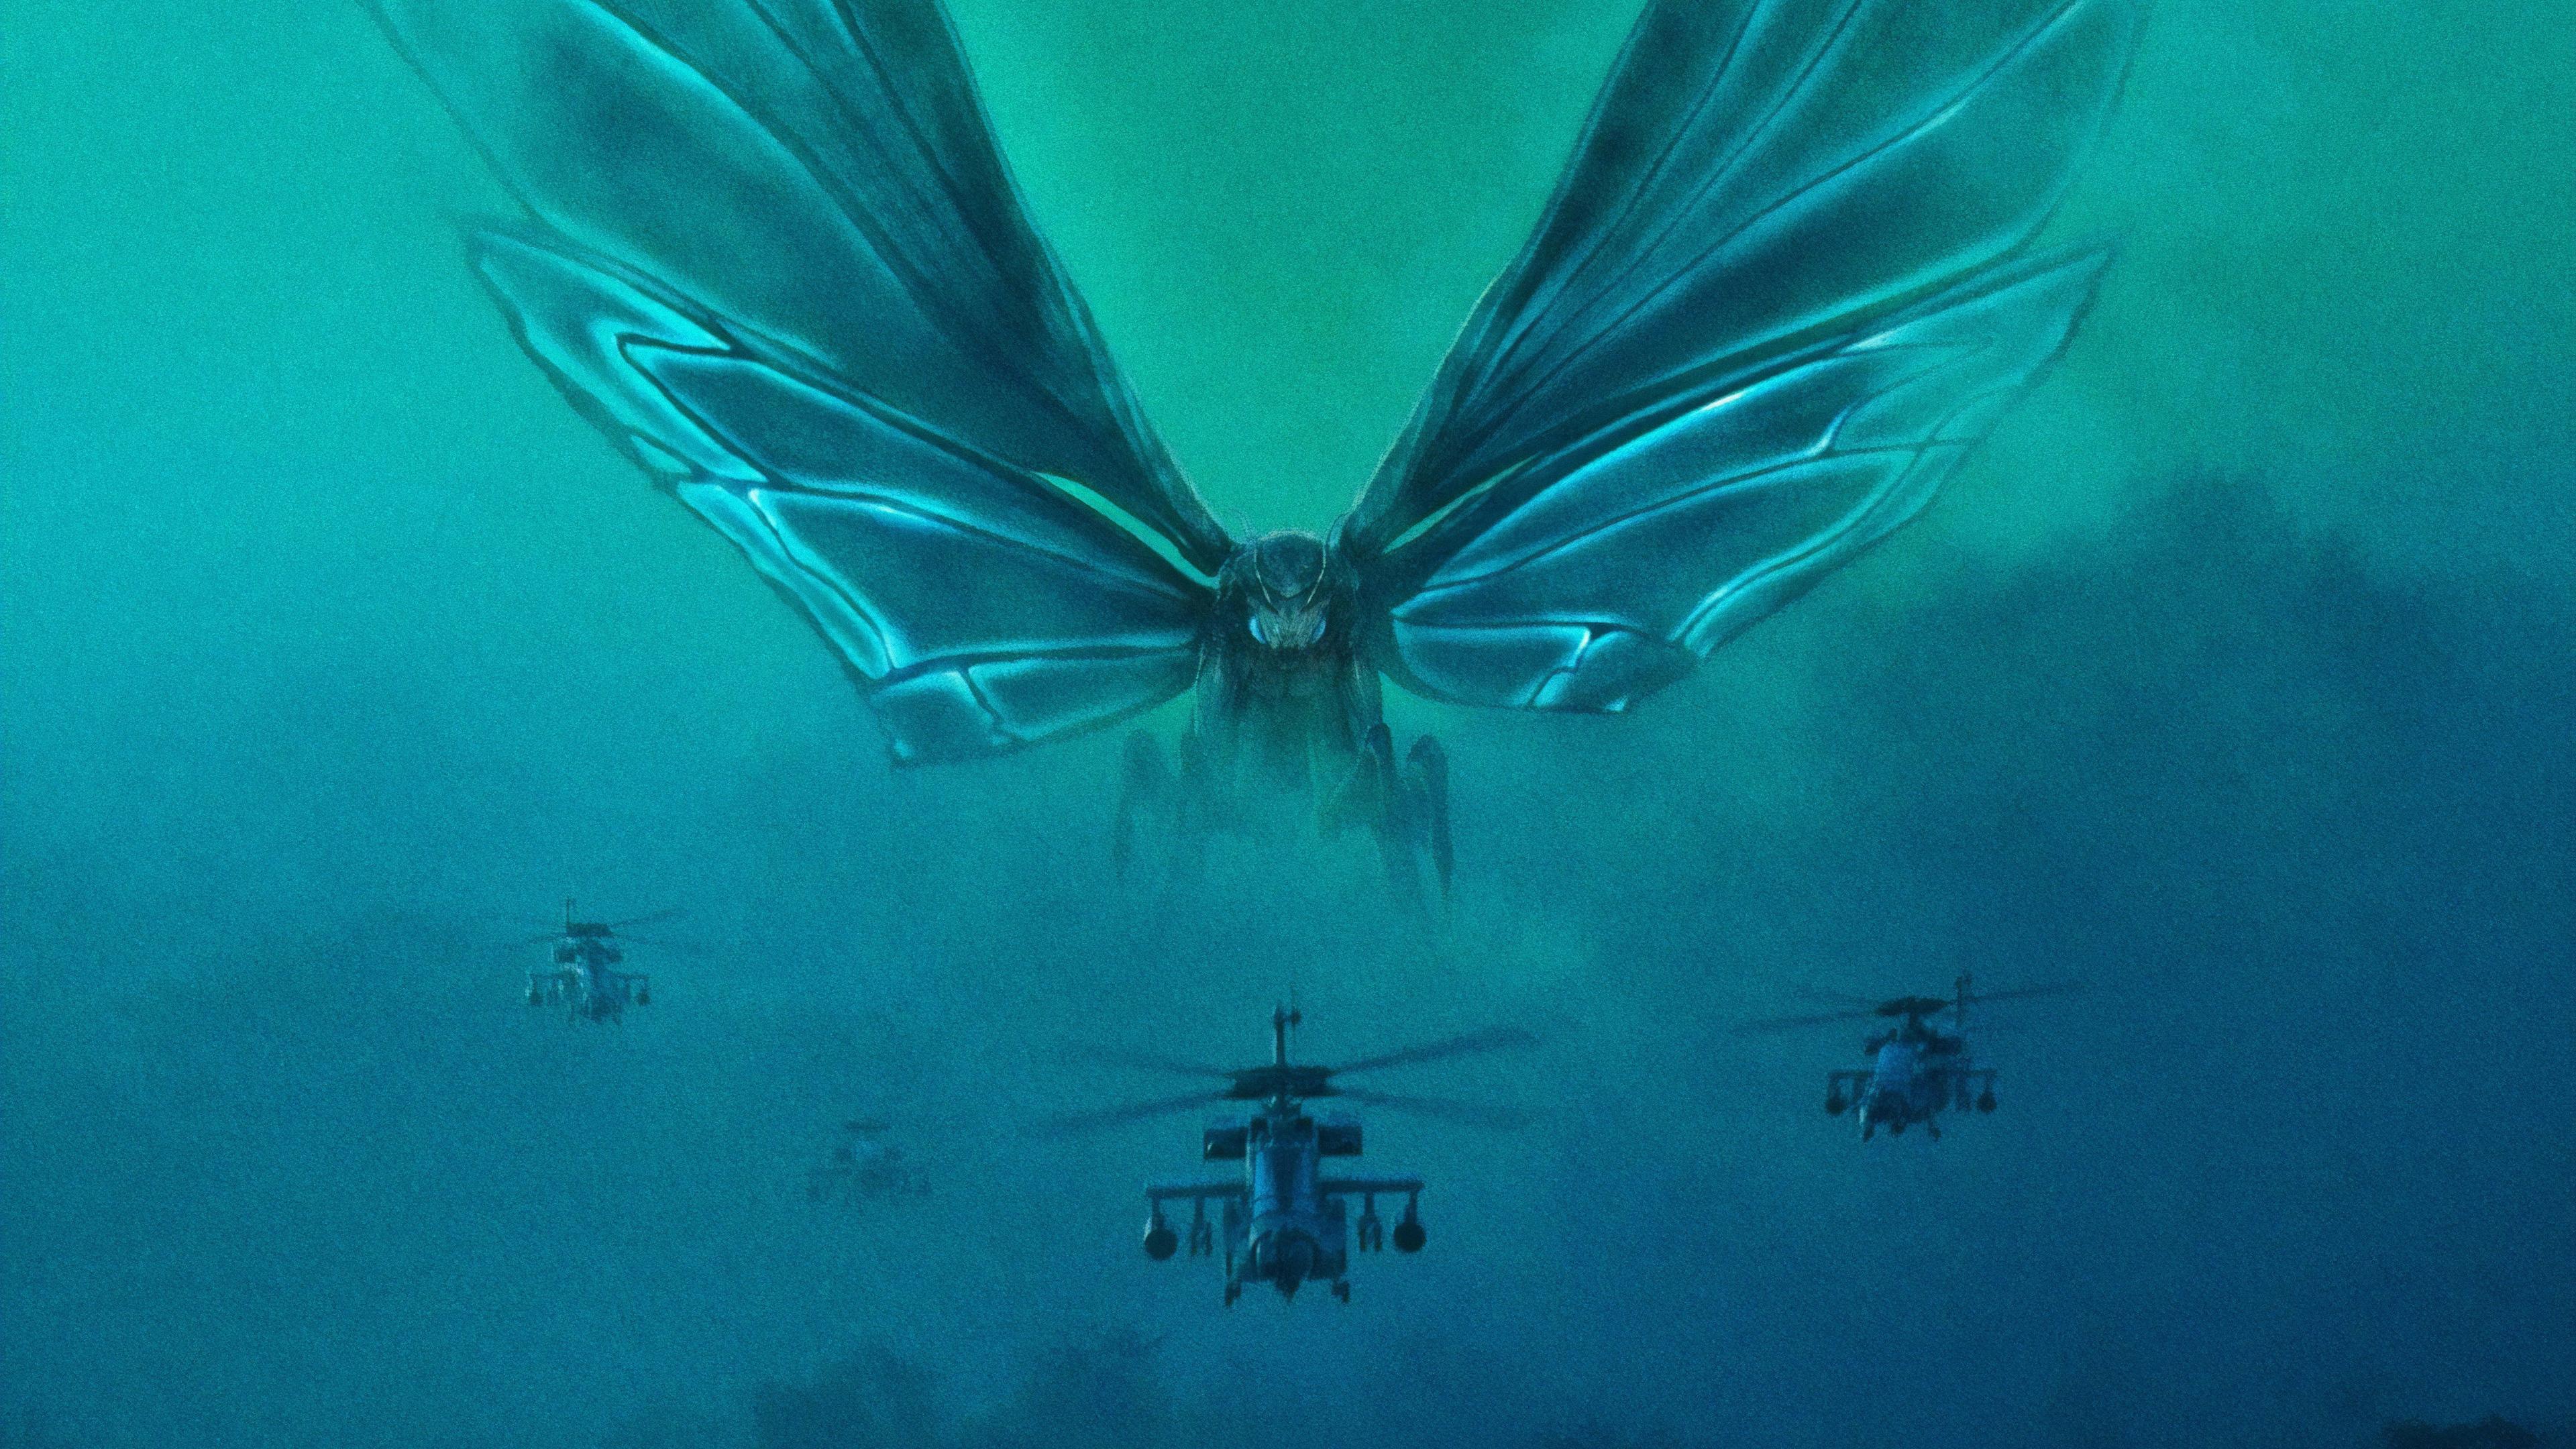 Wallpaper 4k Mothra Godzilla King Of The Monsters 4k 2019 movies